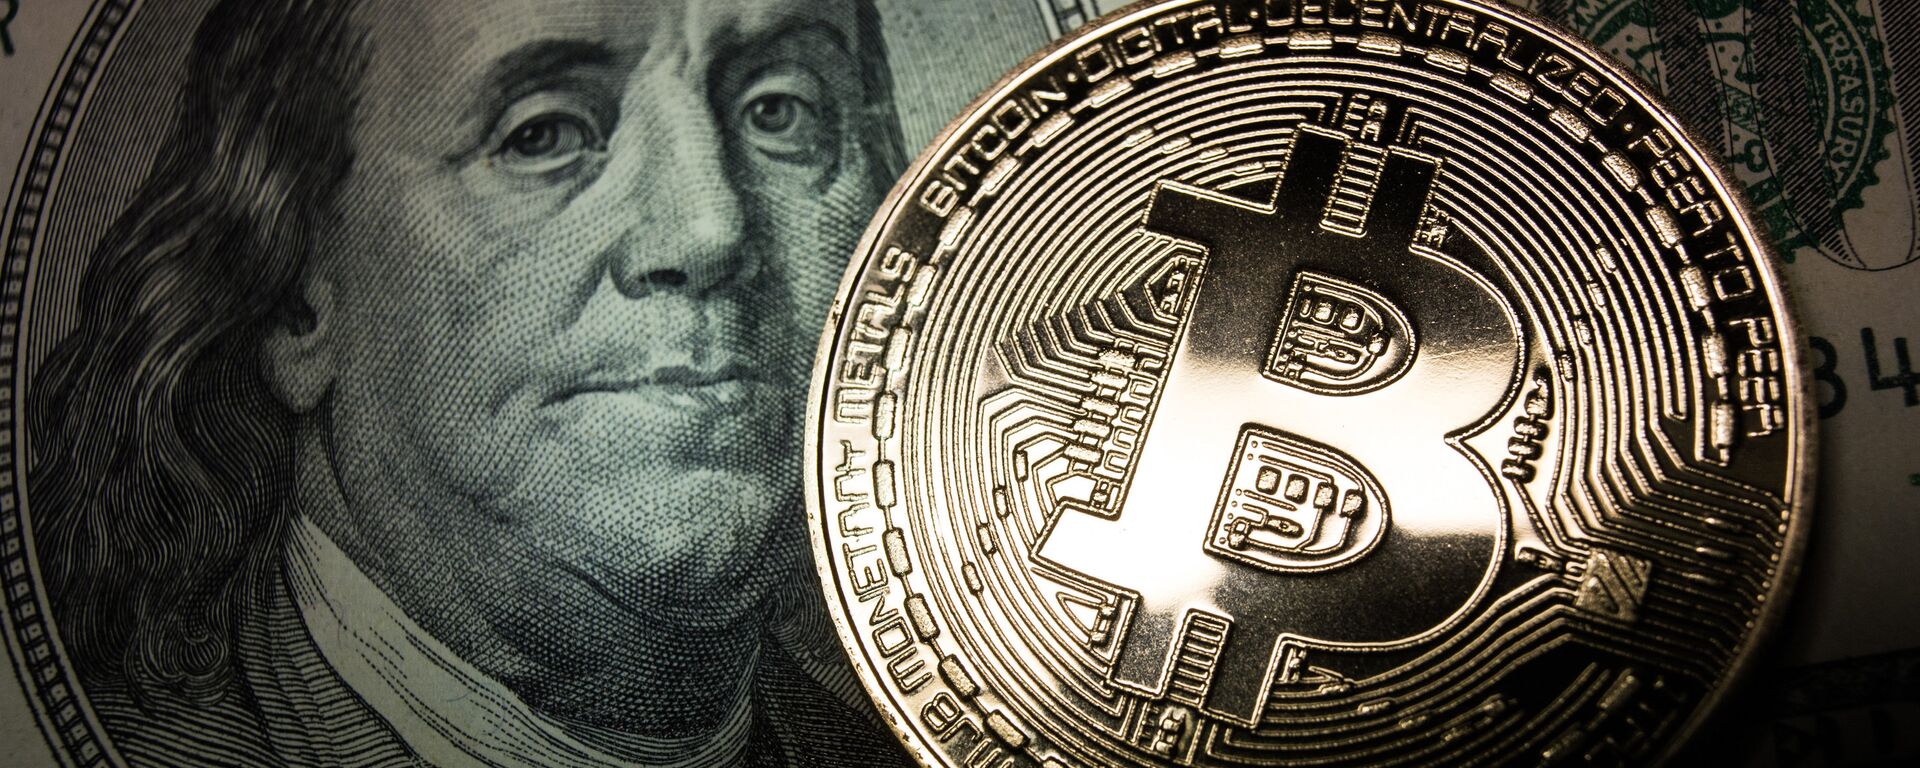 Bitcoin y un billete de dólar - Sputnik Mundo, 1920, 17.04.2021